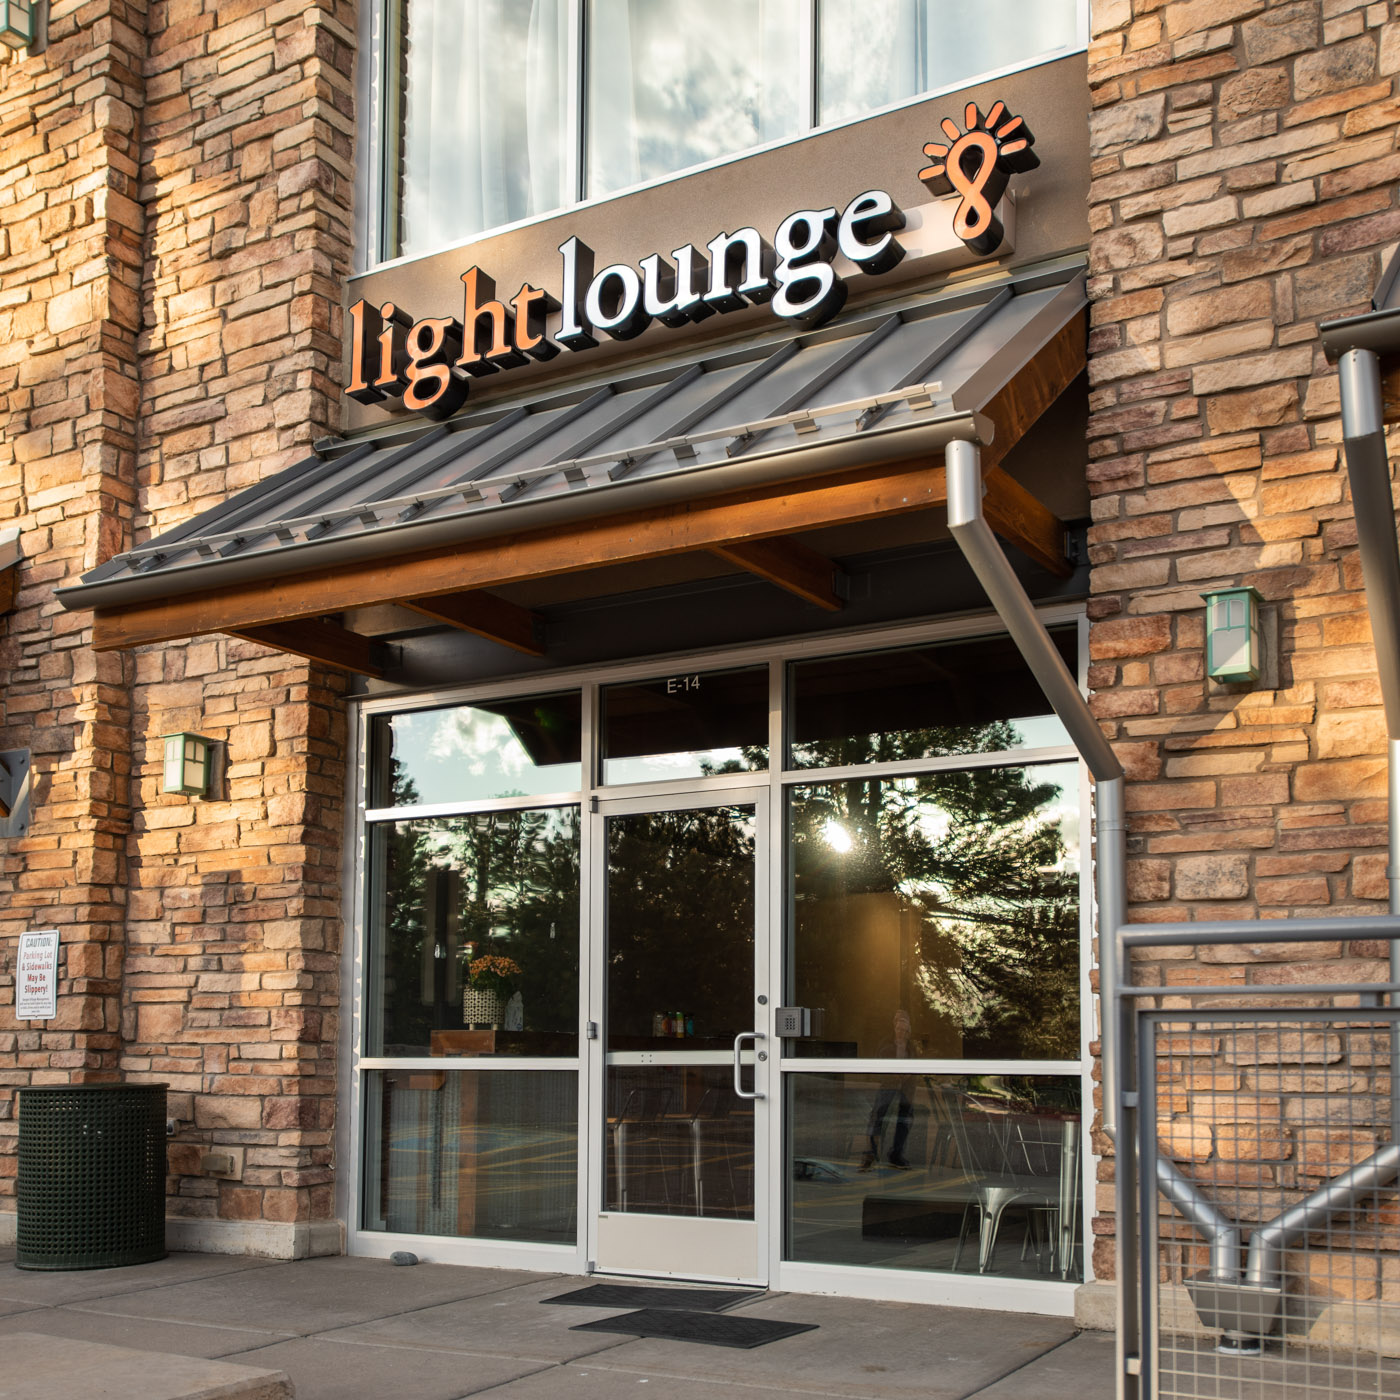 Light Lounge careers near you.